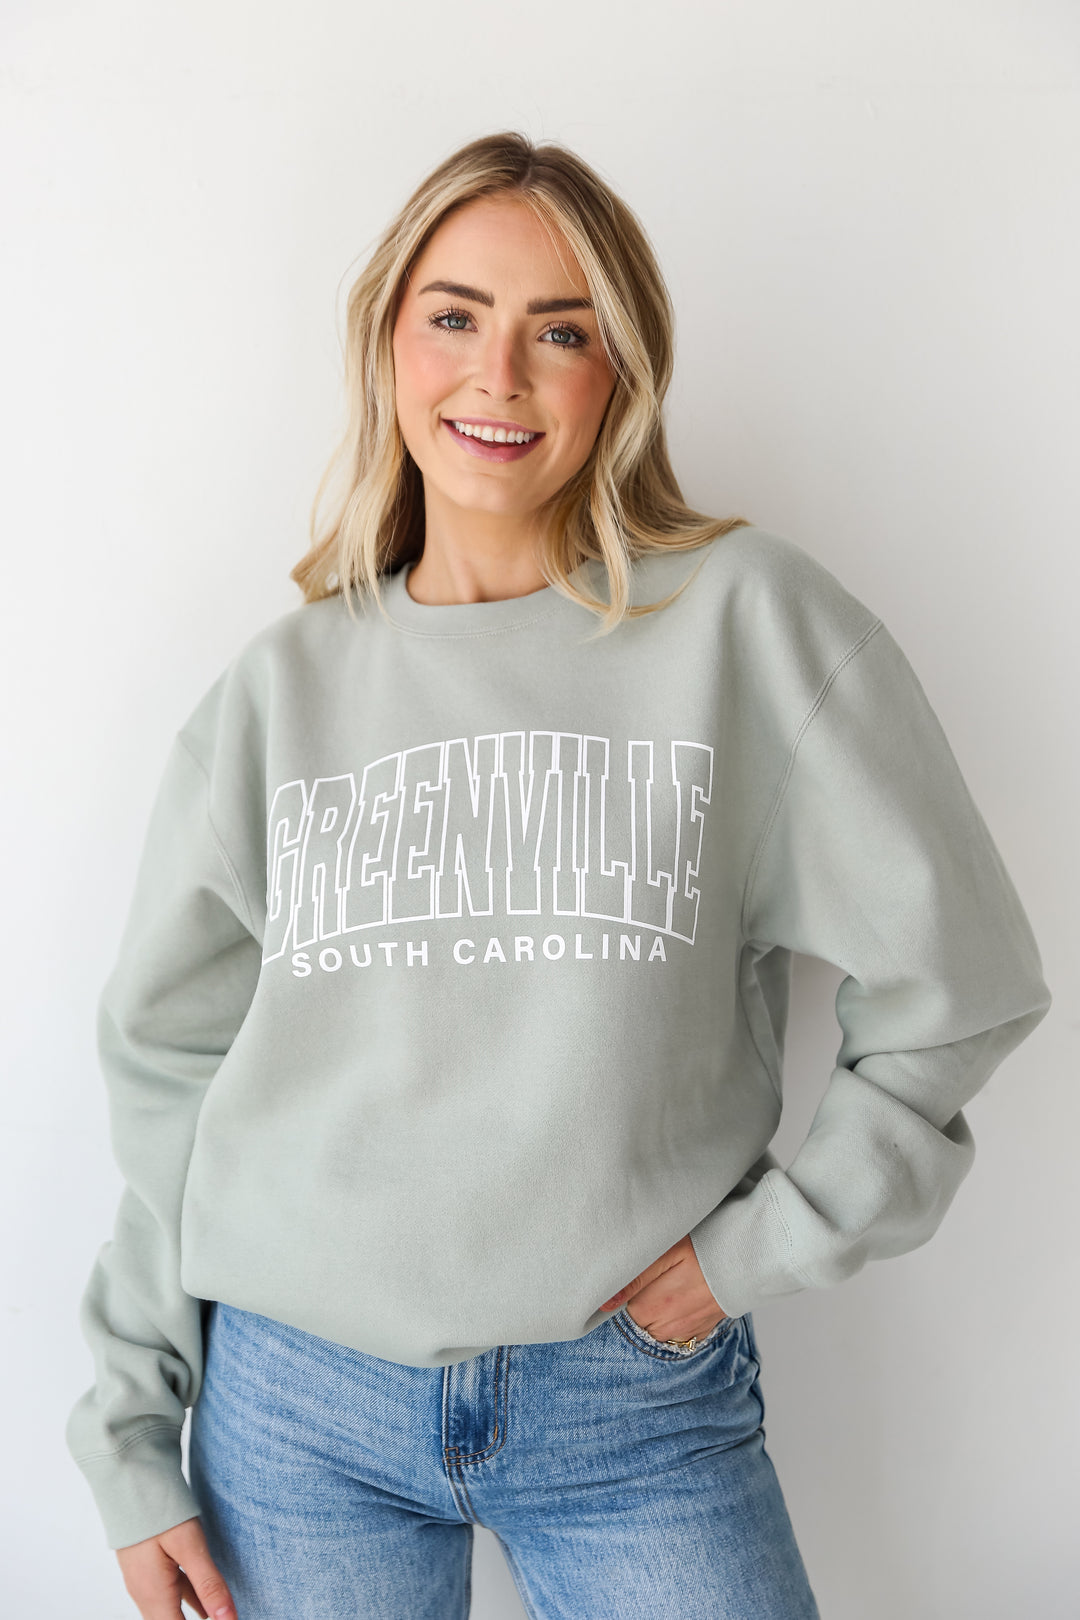 Sage Greenville South Carolina Sweatshirt